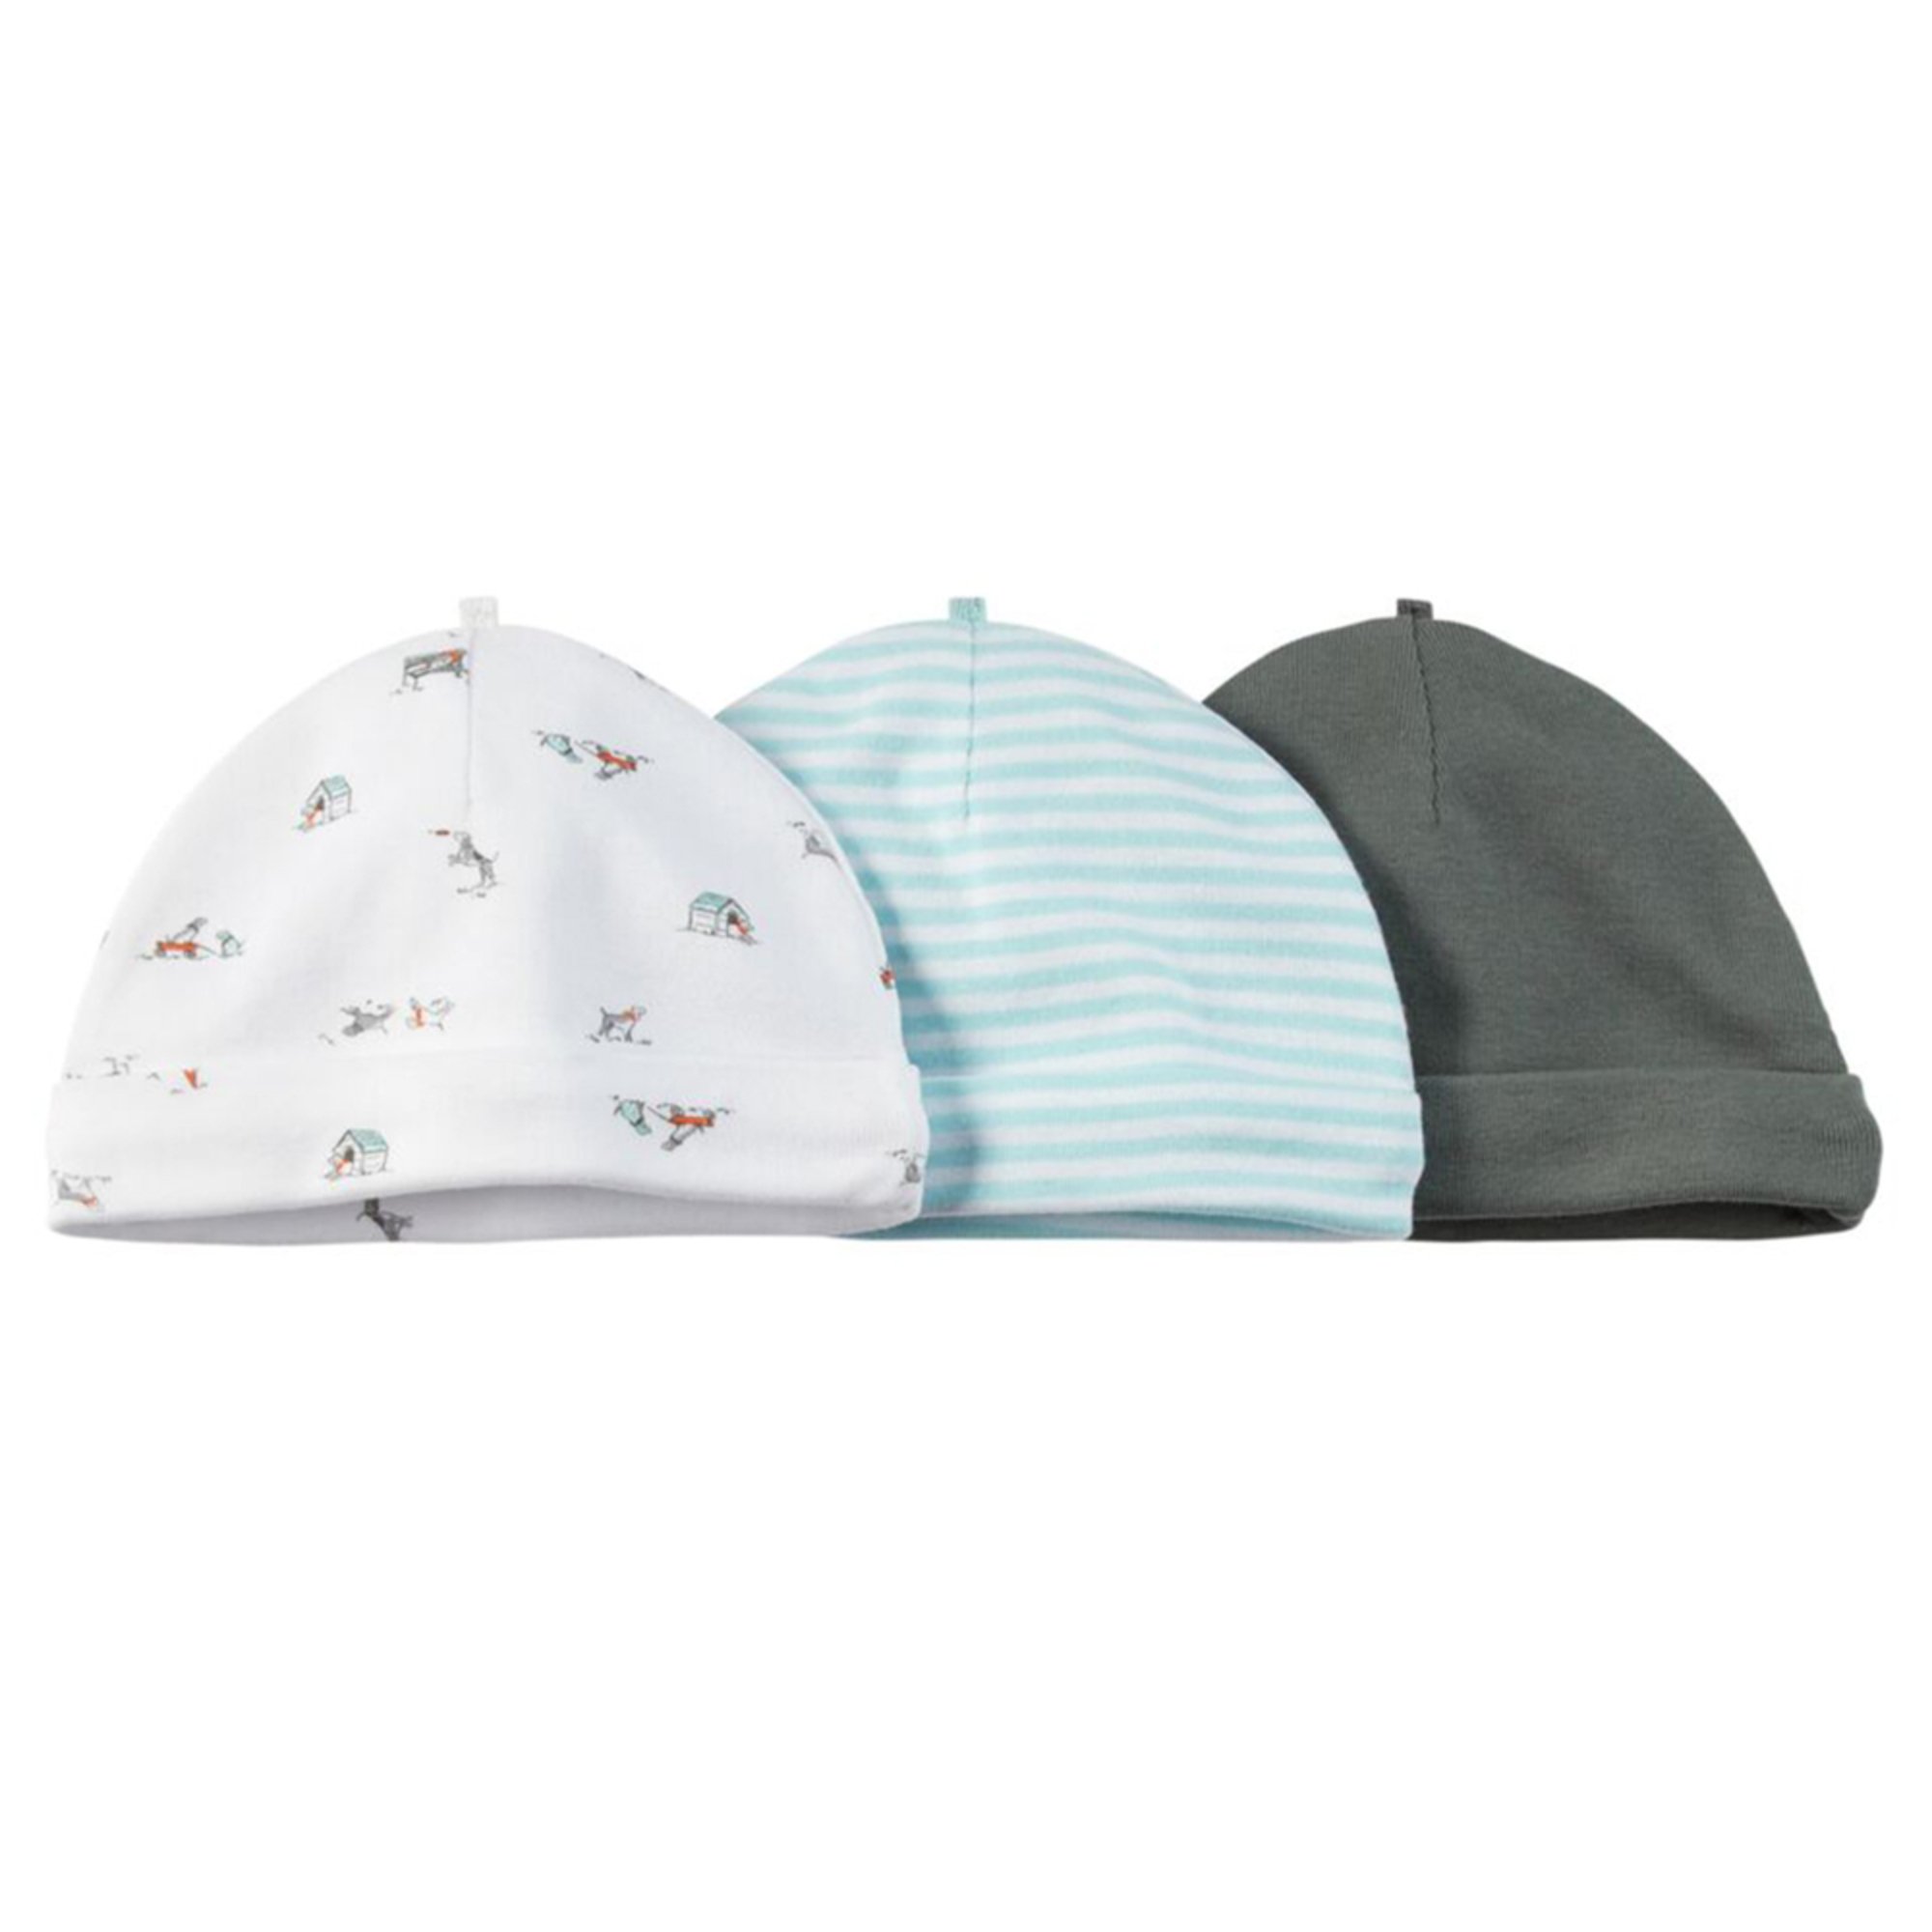 540 New baby headbands and hats 564 Carter's Baby Boys' 3 pack Blue Hats   Baby Hats, Caps & Headbands   